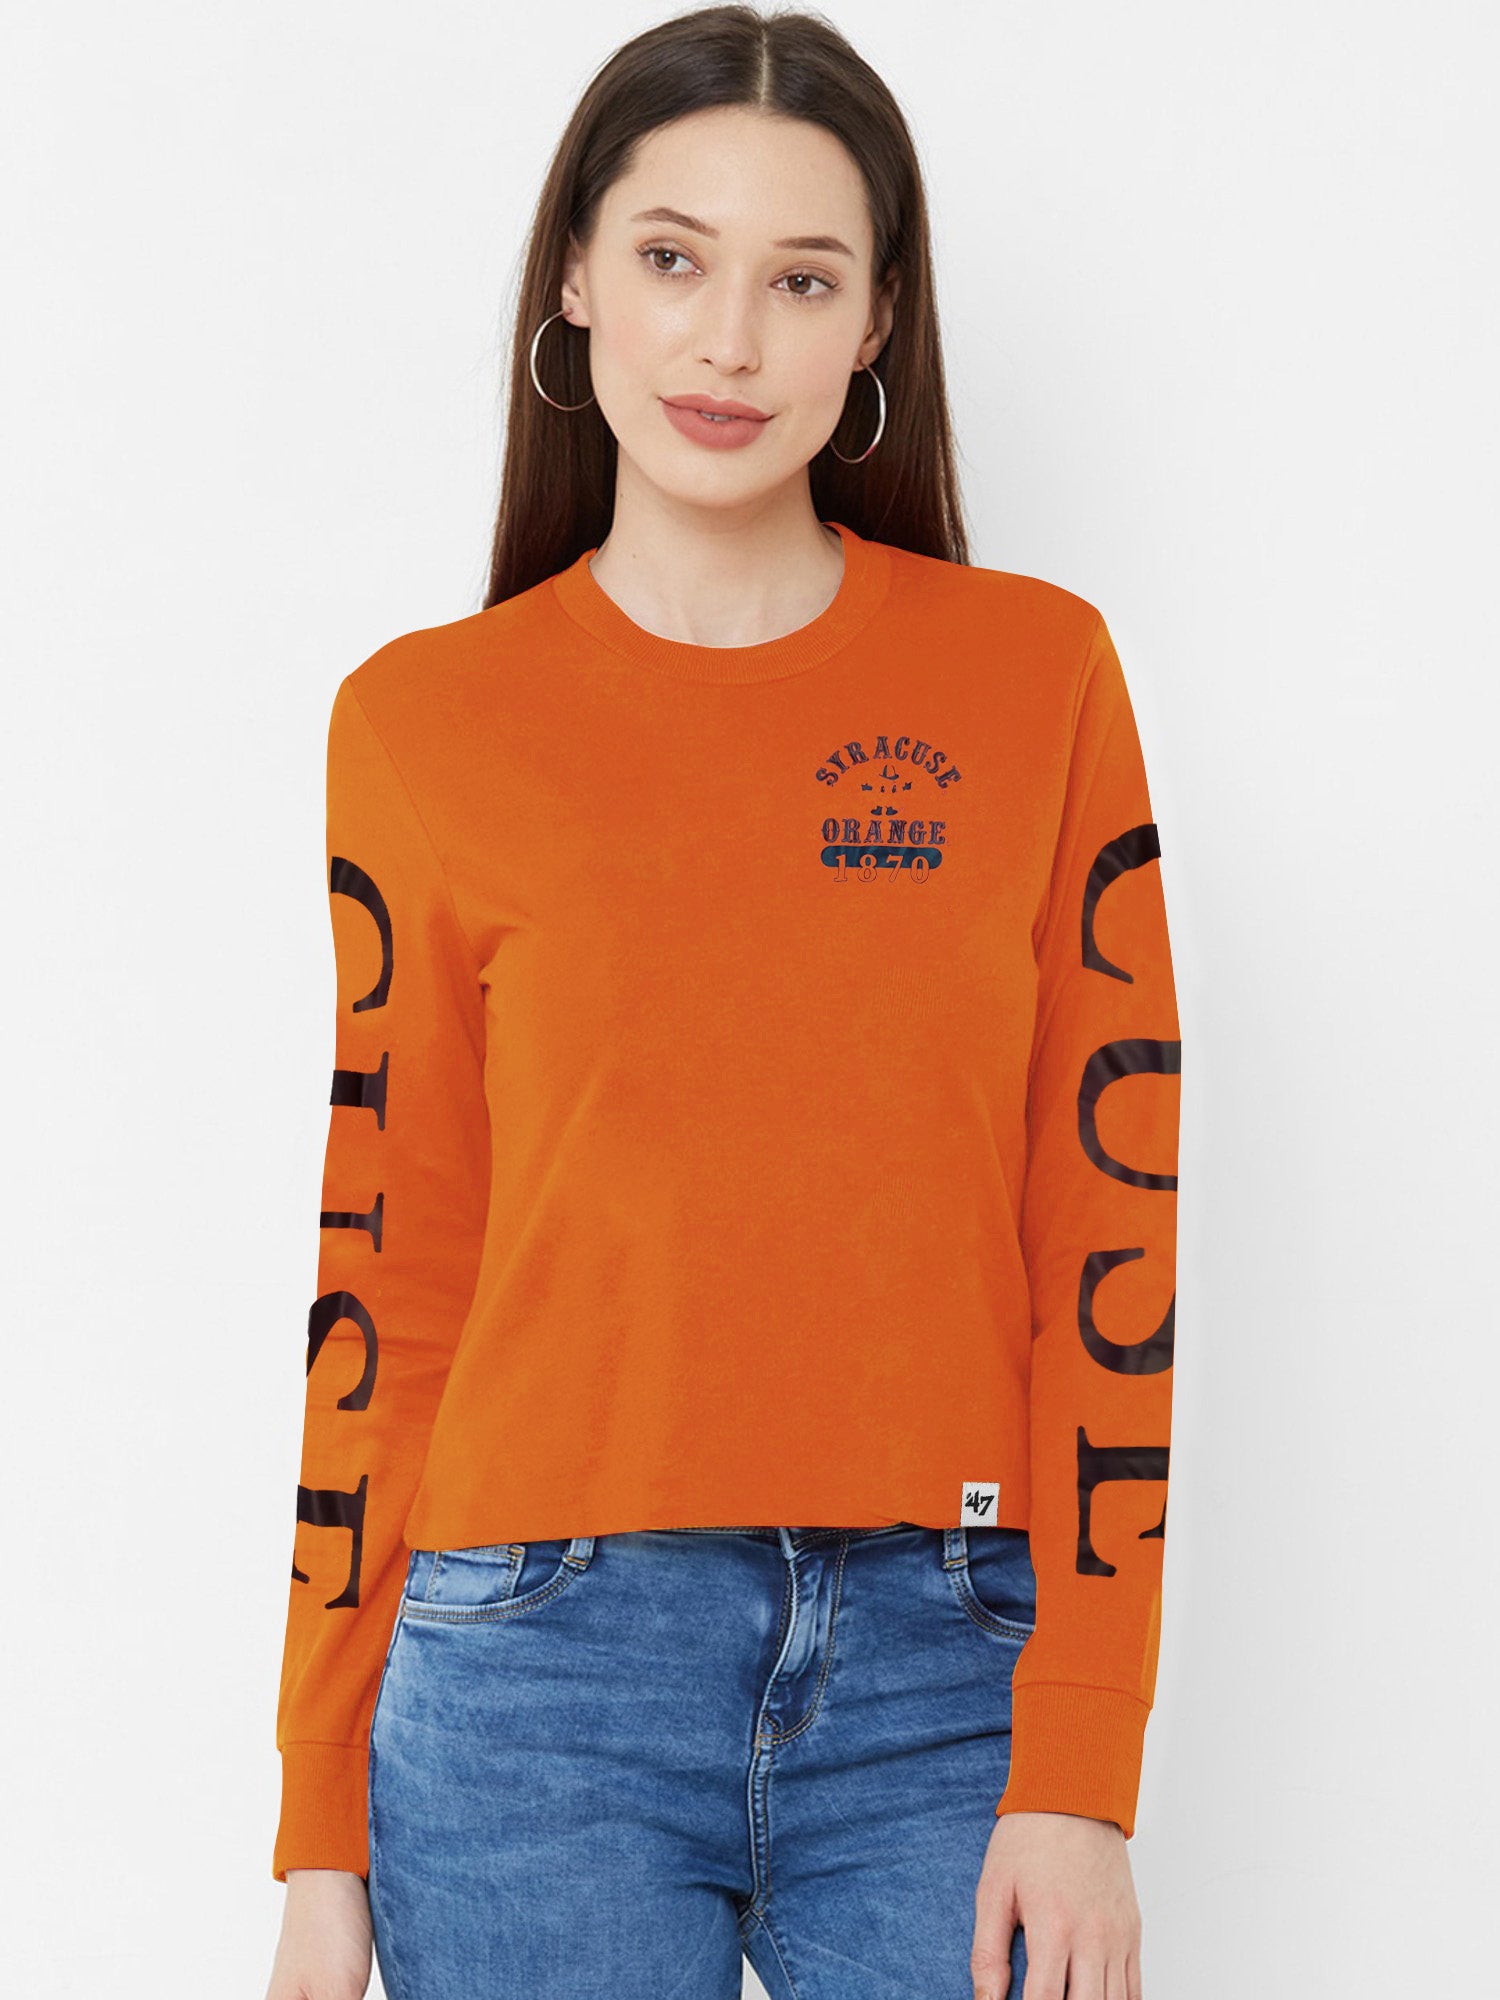 47 Crew Neck Full Sleeve Crop Tee Shirt For Ladies-Orange-SP1989